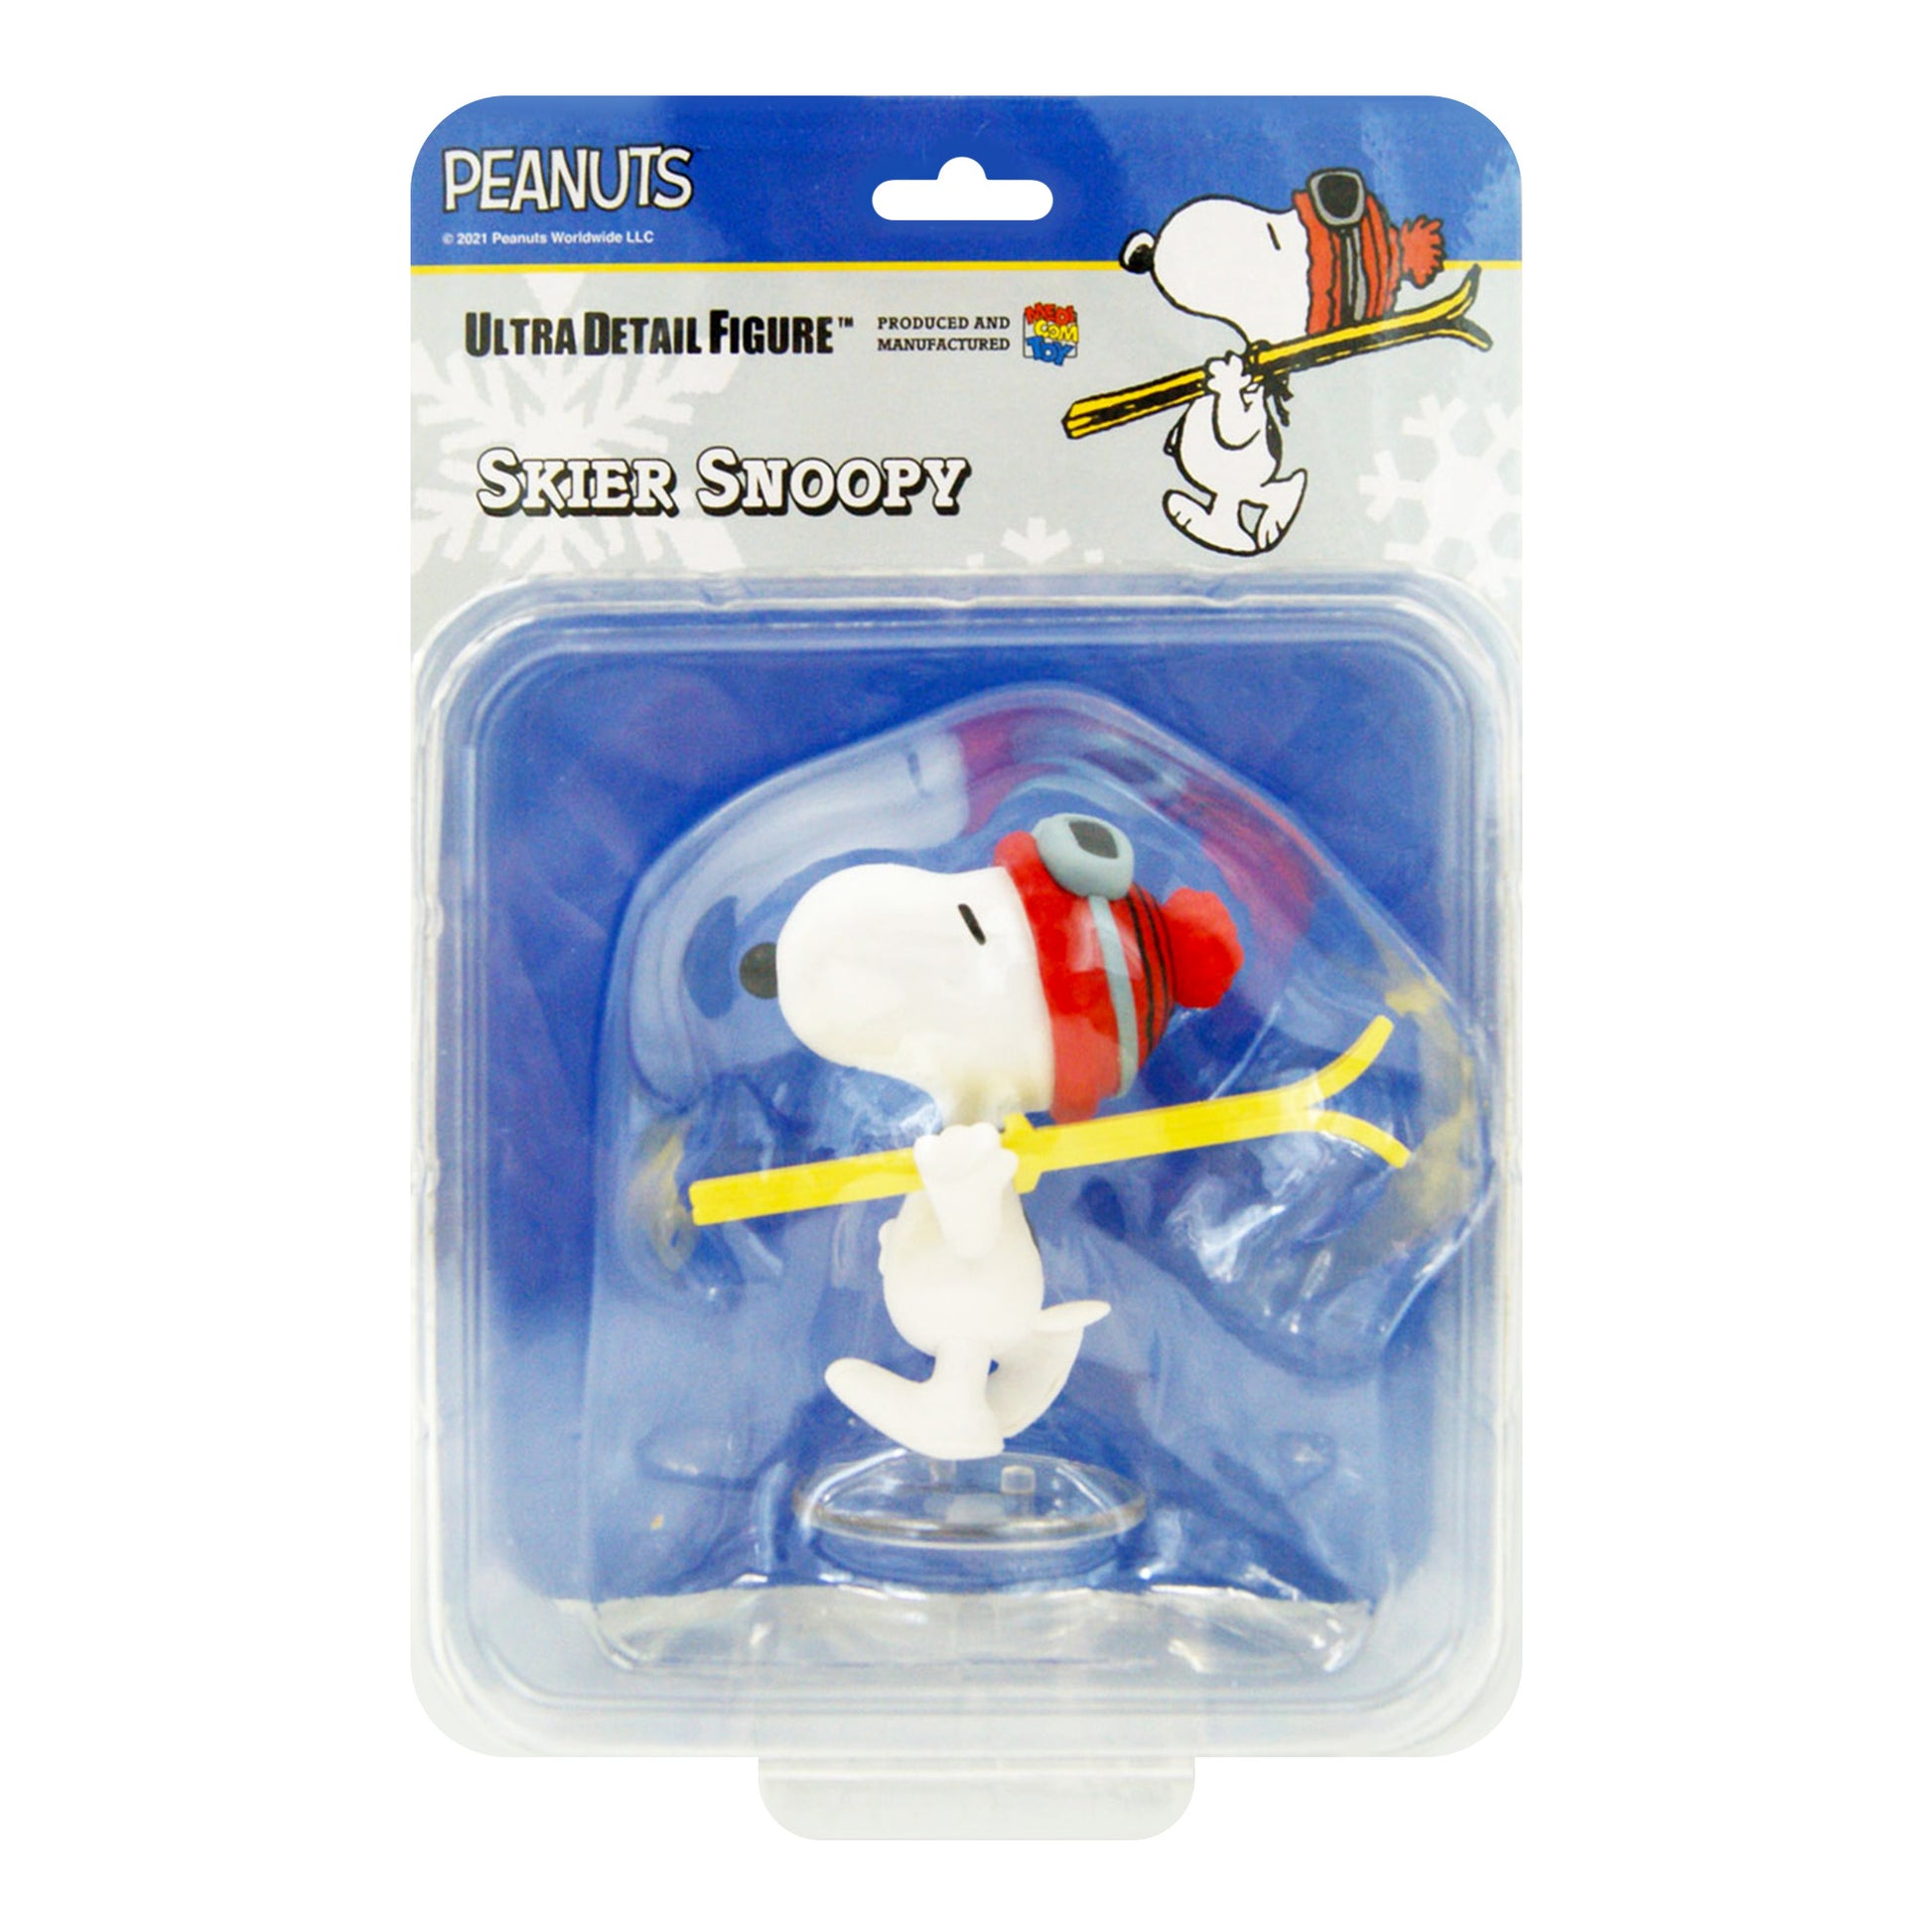 MEDICOM TOY: UDF Peanuts Series 12 - Skier Snoopy Figure – TOY TOKYO